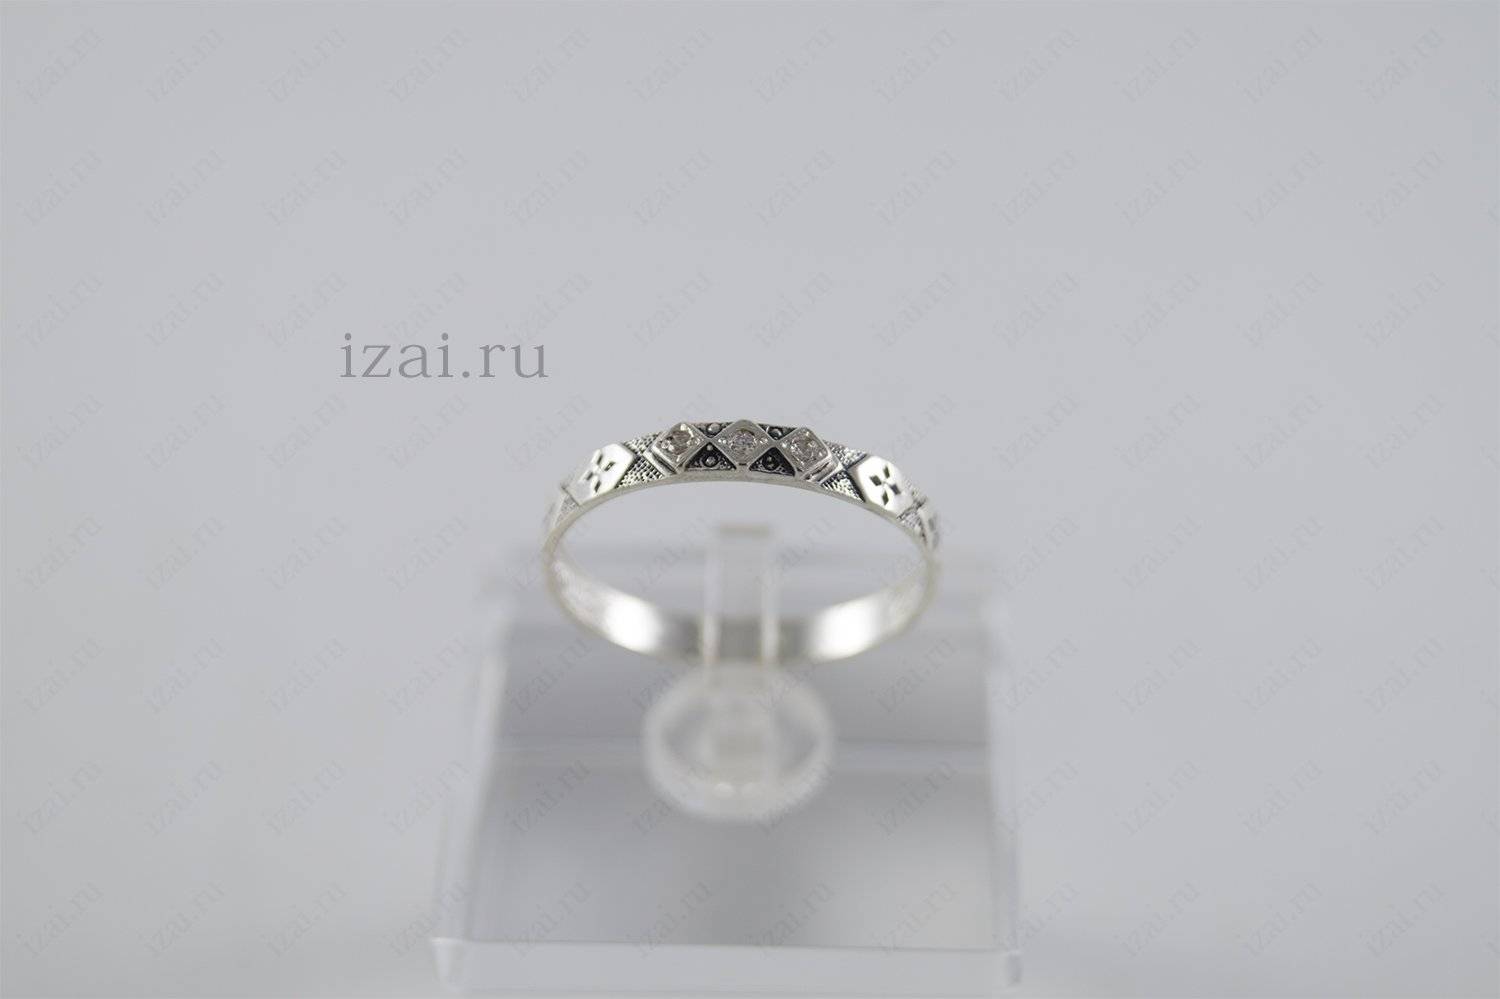 Кольцо с камнем. Серебро золото. izai (2)